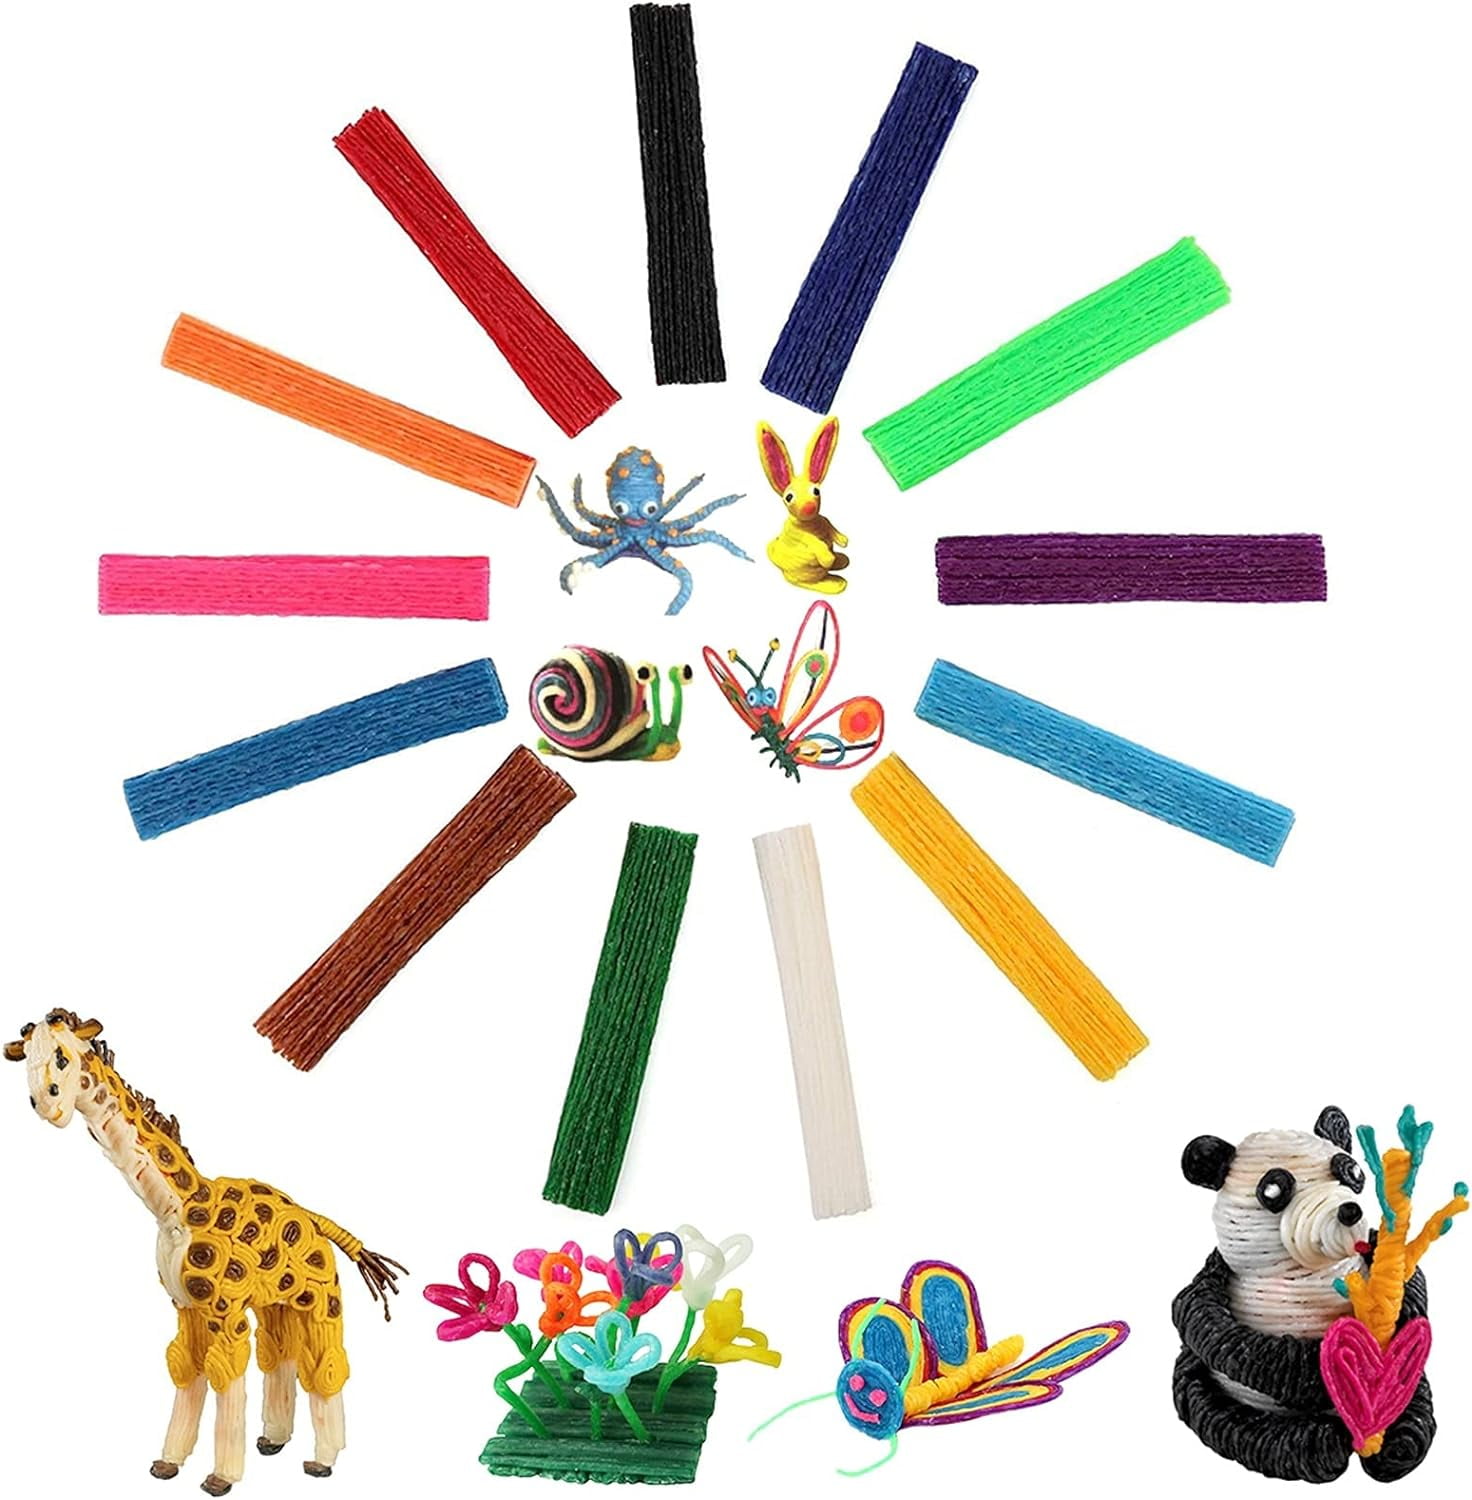 Impresa of Monkey String - Wax Yarn Toy - 500 Piece Pack (Jumbo Pack) 